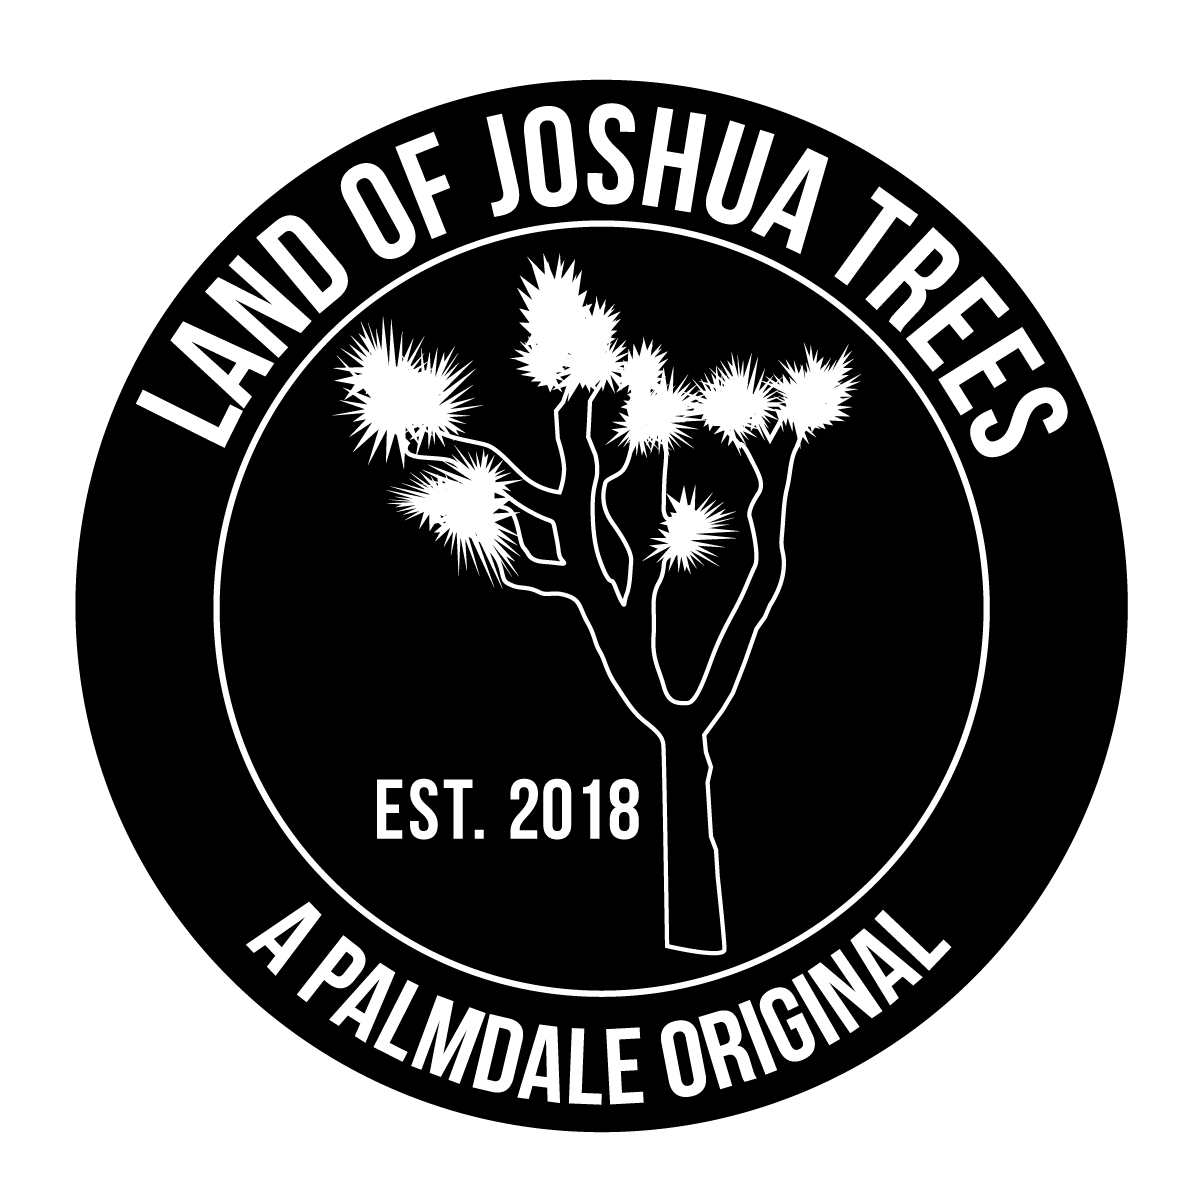 Land Of Joshua Trees: A Palmdale Original